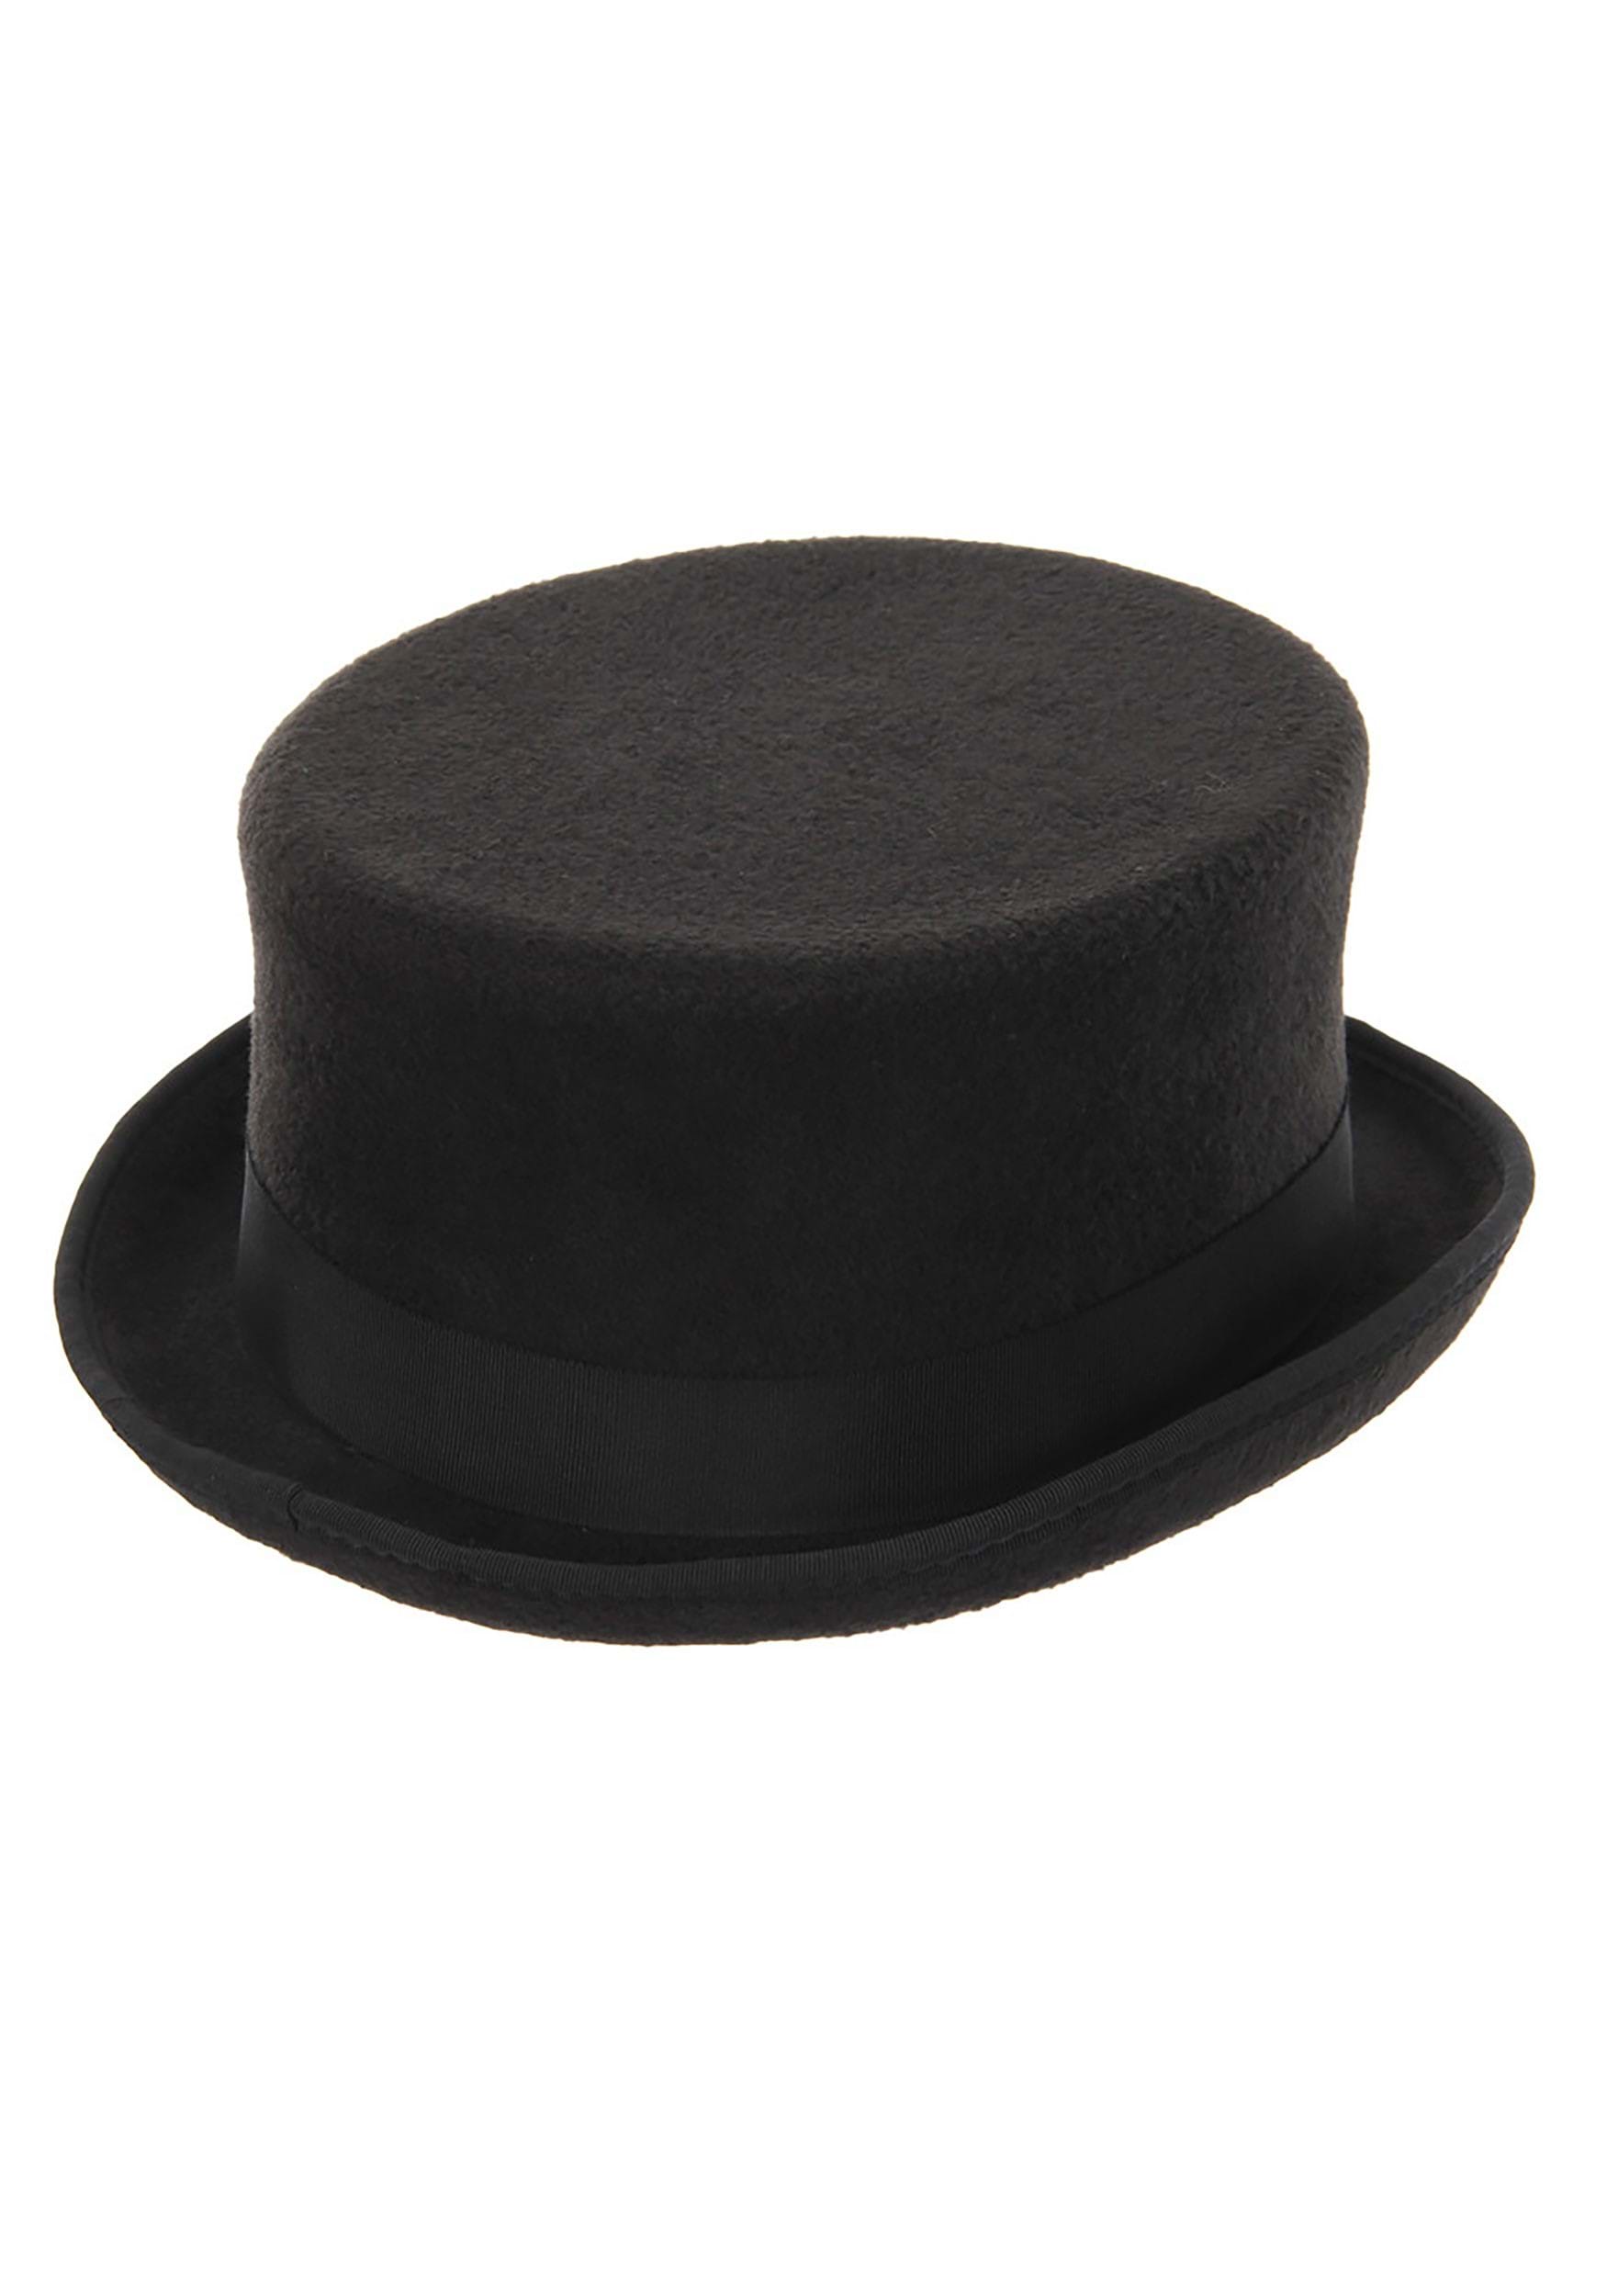 Black John Bull Top Costume Hat , Steampunk Costume Accessories